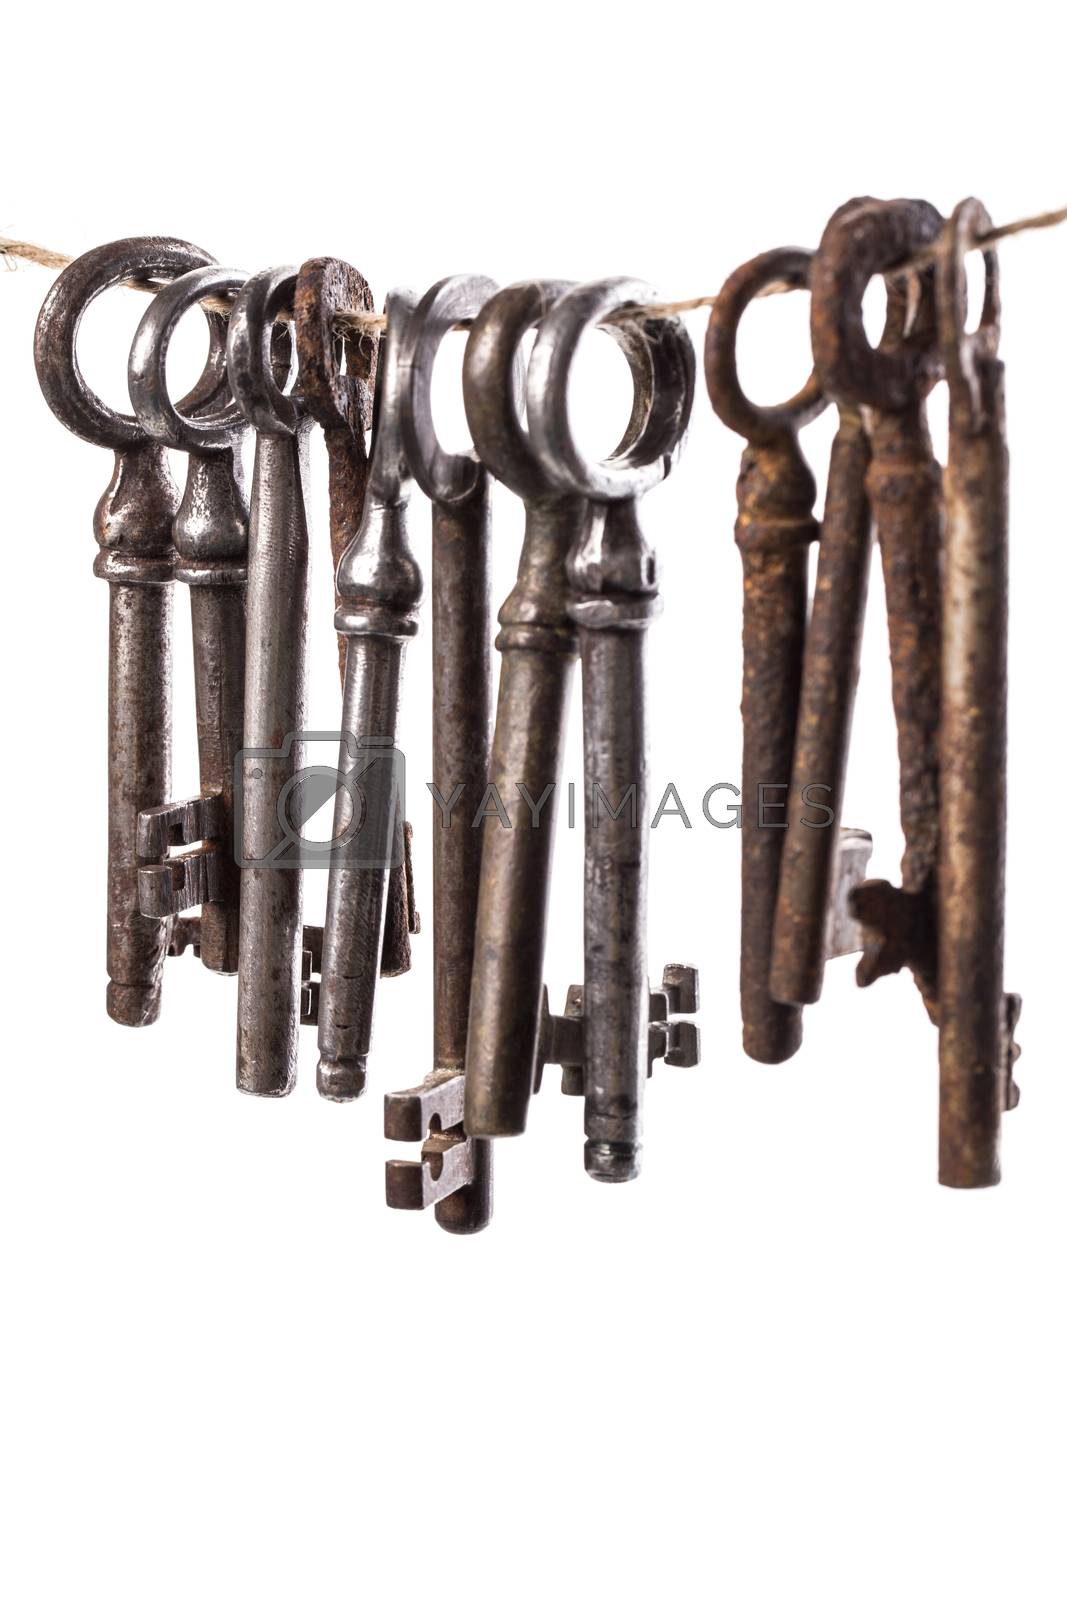 Royalty free image of Old, ornate keys by rufatjumali